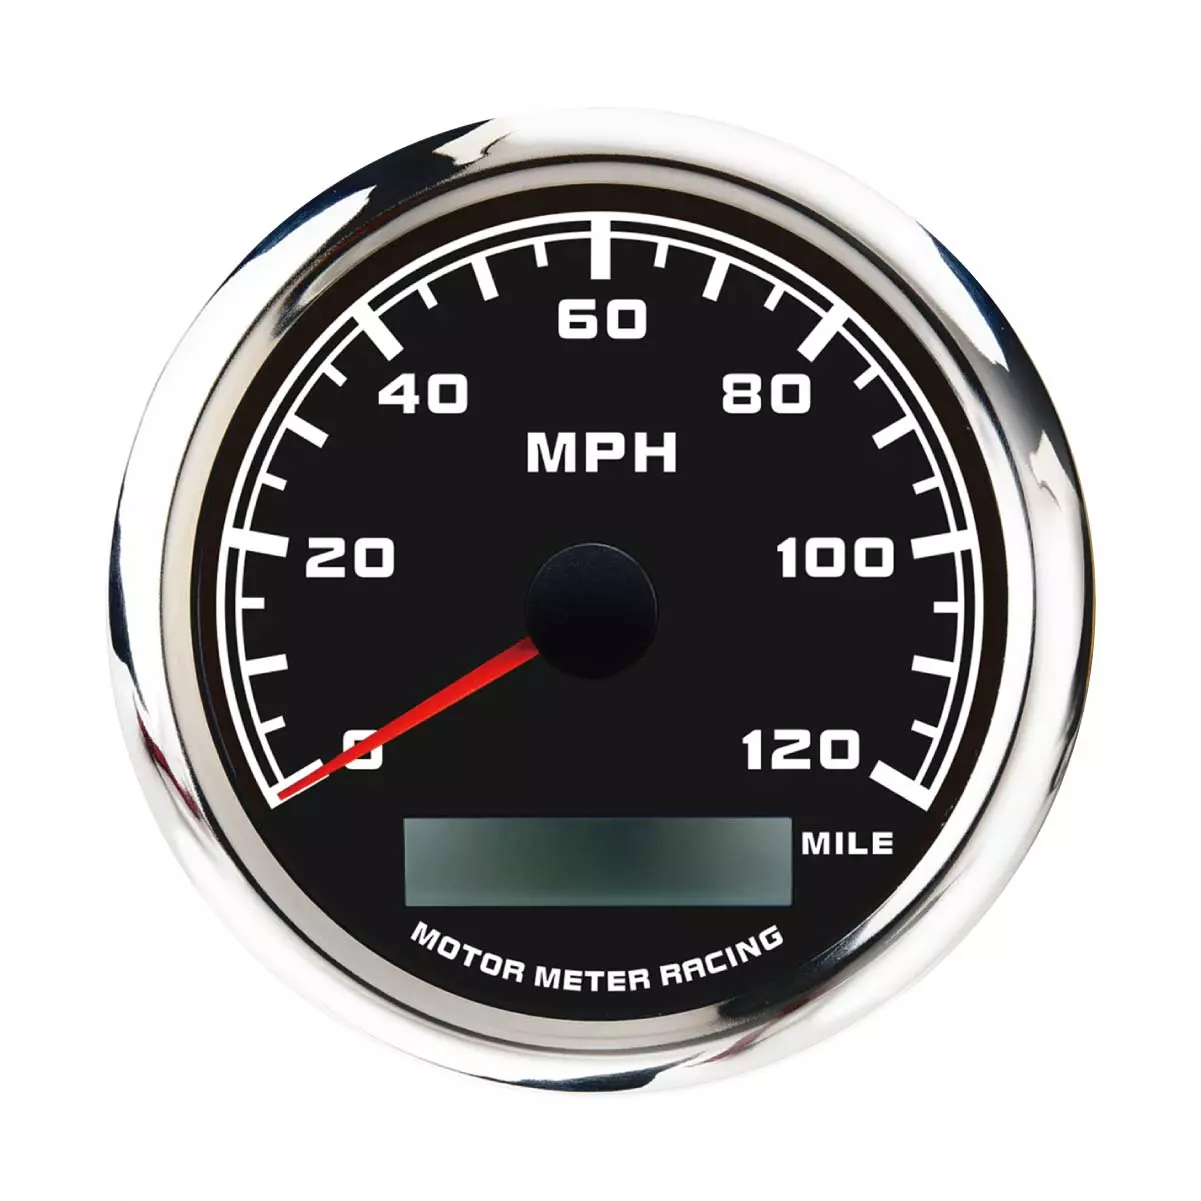 MOTOR METER RACING W Pro GPS Speedometer Odometer Waterproof for Car Boat Motorcycle White Dial Red LED Included GPS Sensor